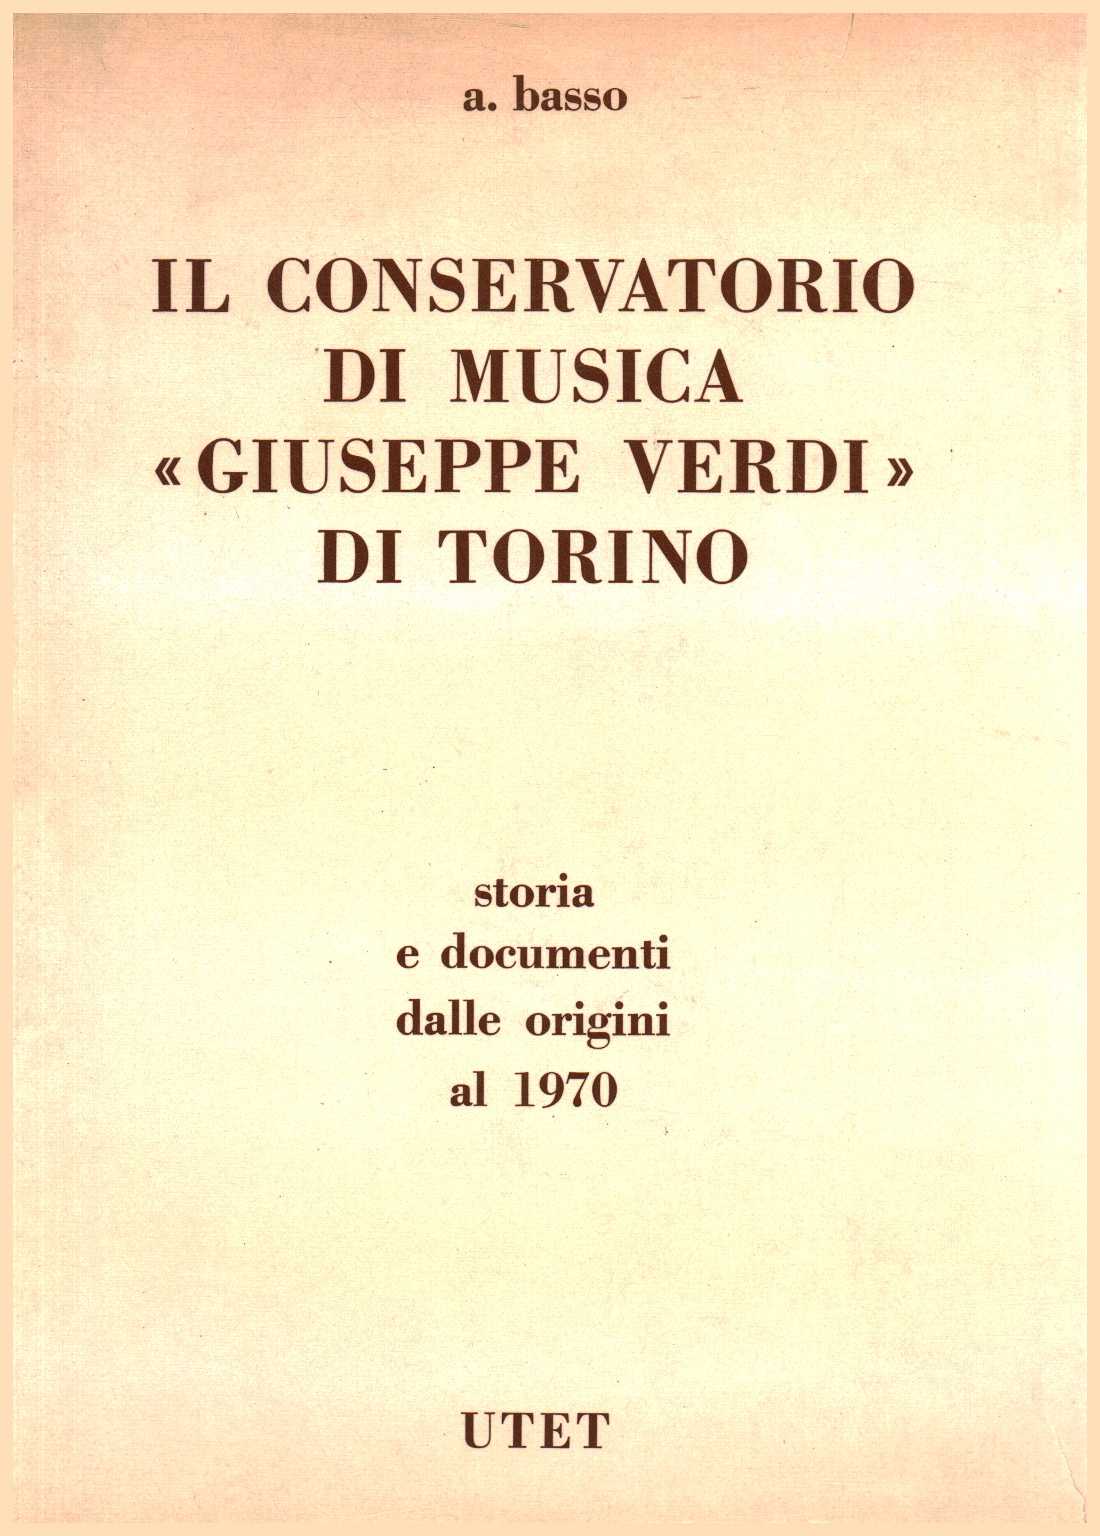 El Conservatorio de Música "Giuseppe Verdi" di Tor, s.una.